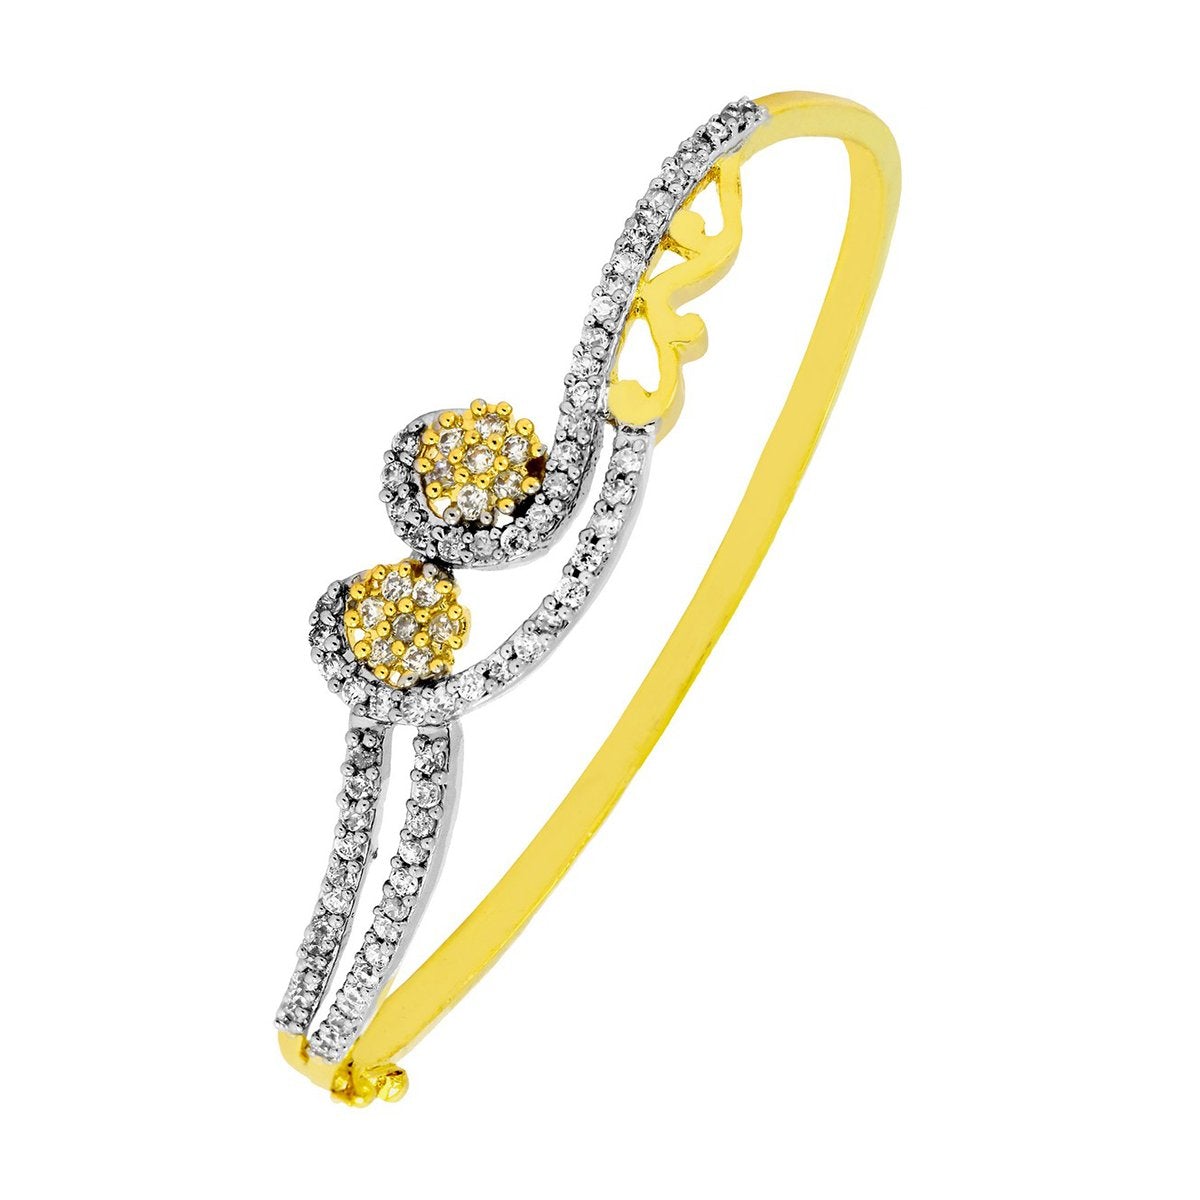 8 Grams Gold Bracelet For Men | Latest Designs For Wedding | Daily Use -  YouTube